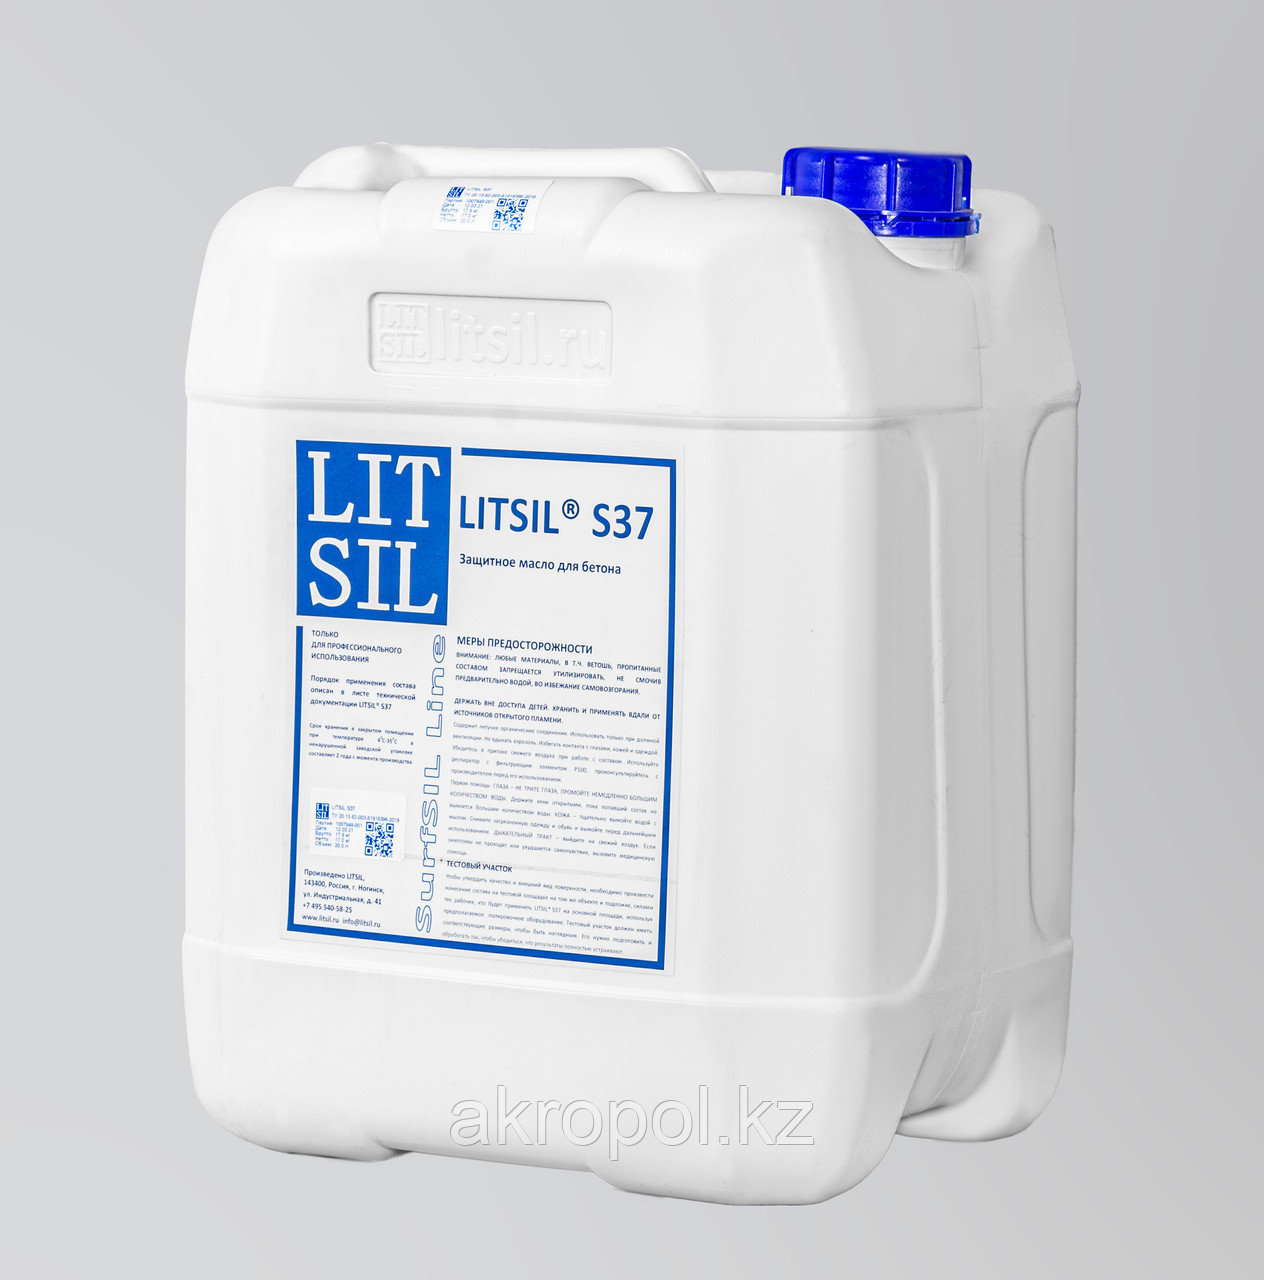 Защитное масло для бетона Litsil S37